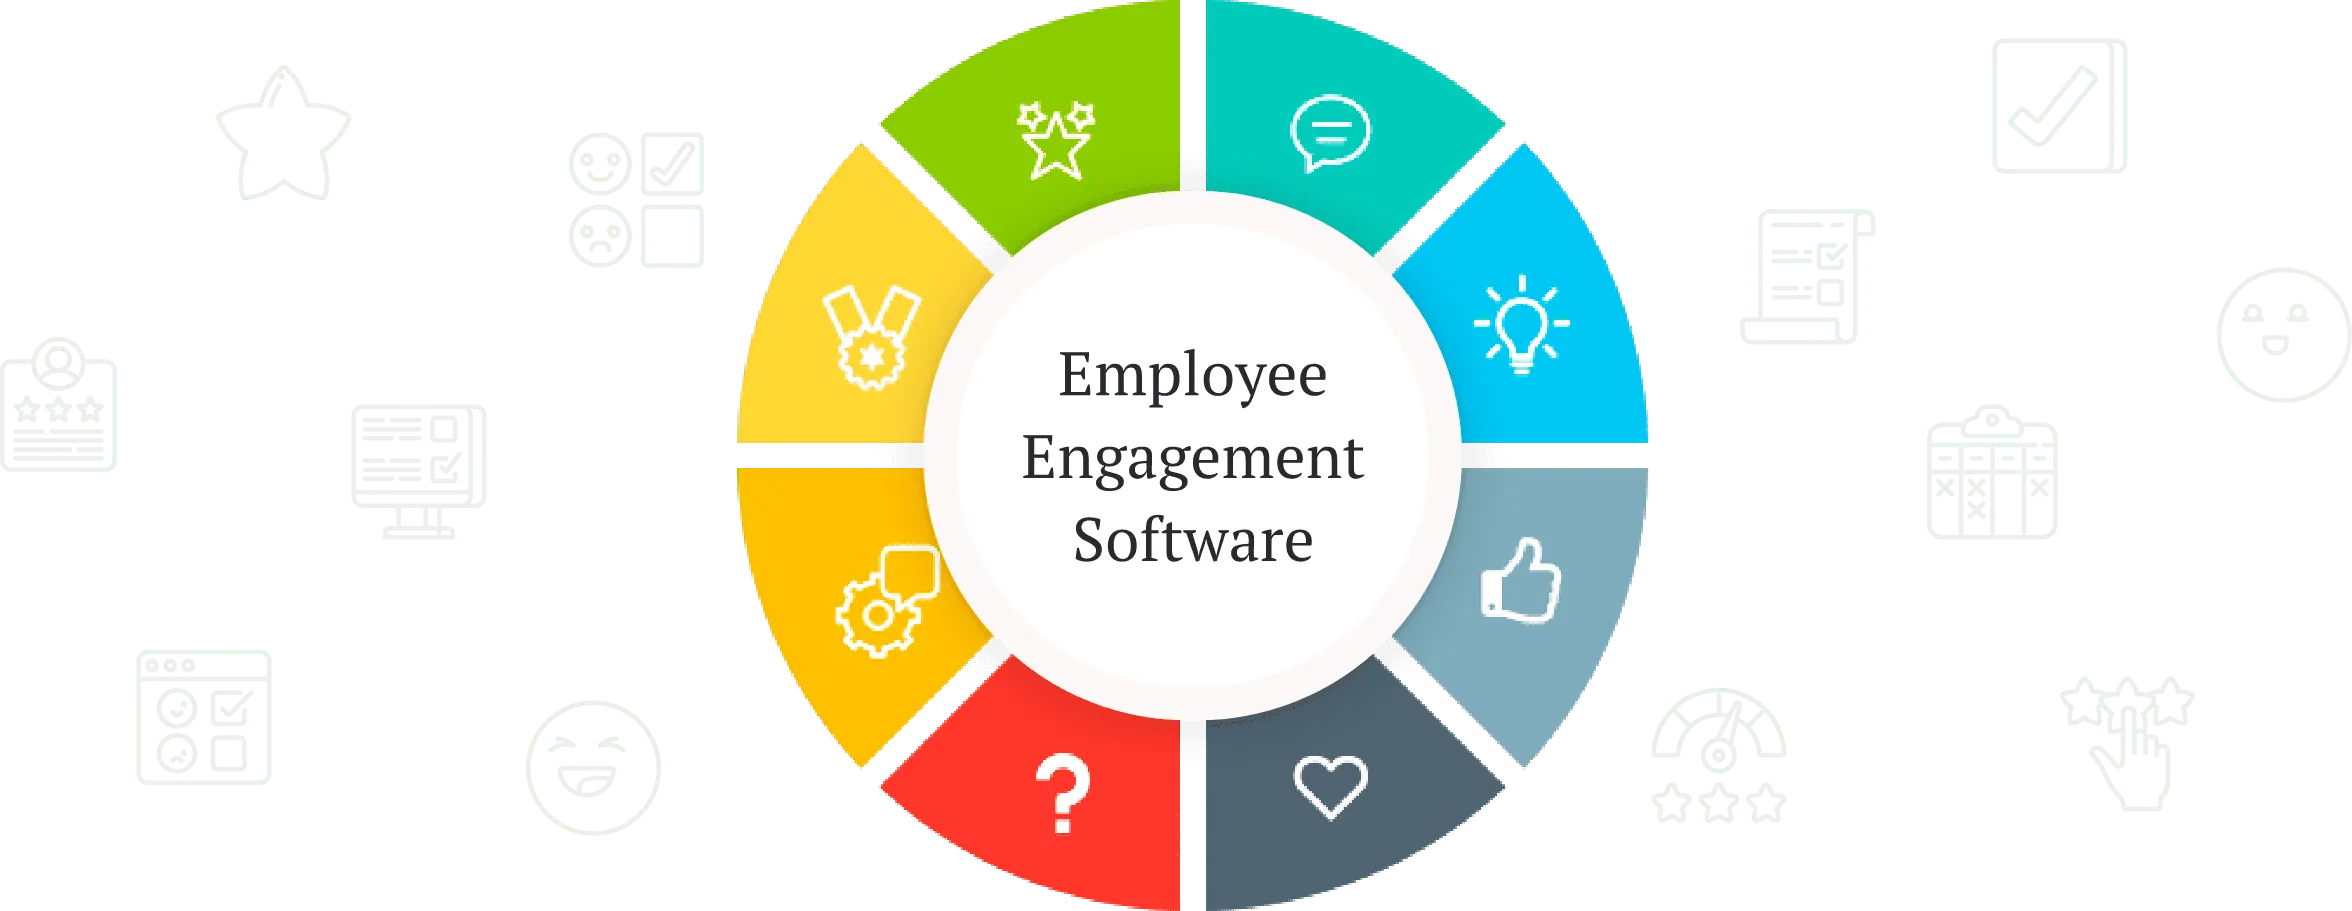 Employee engagement software